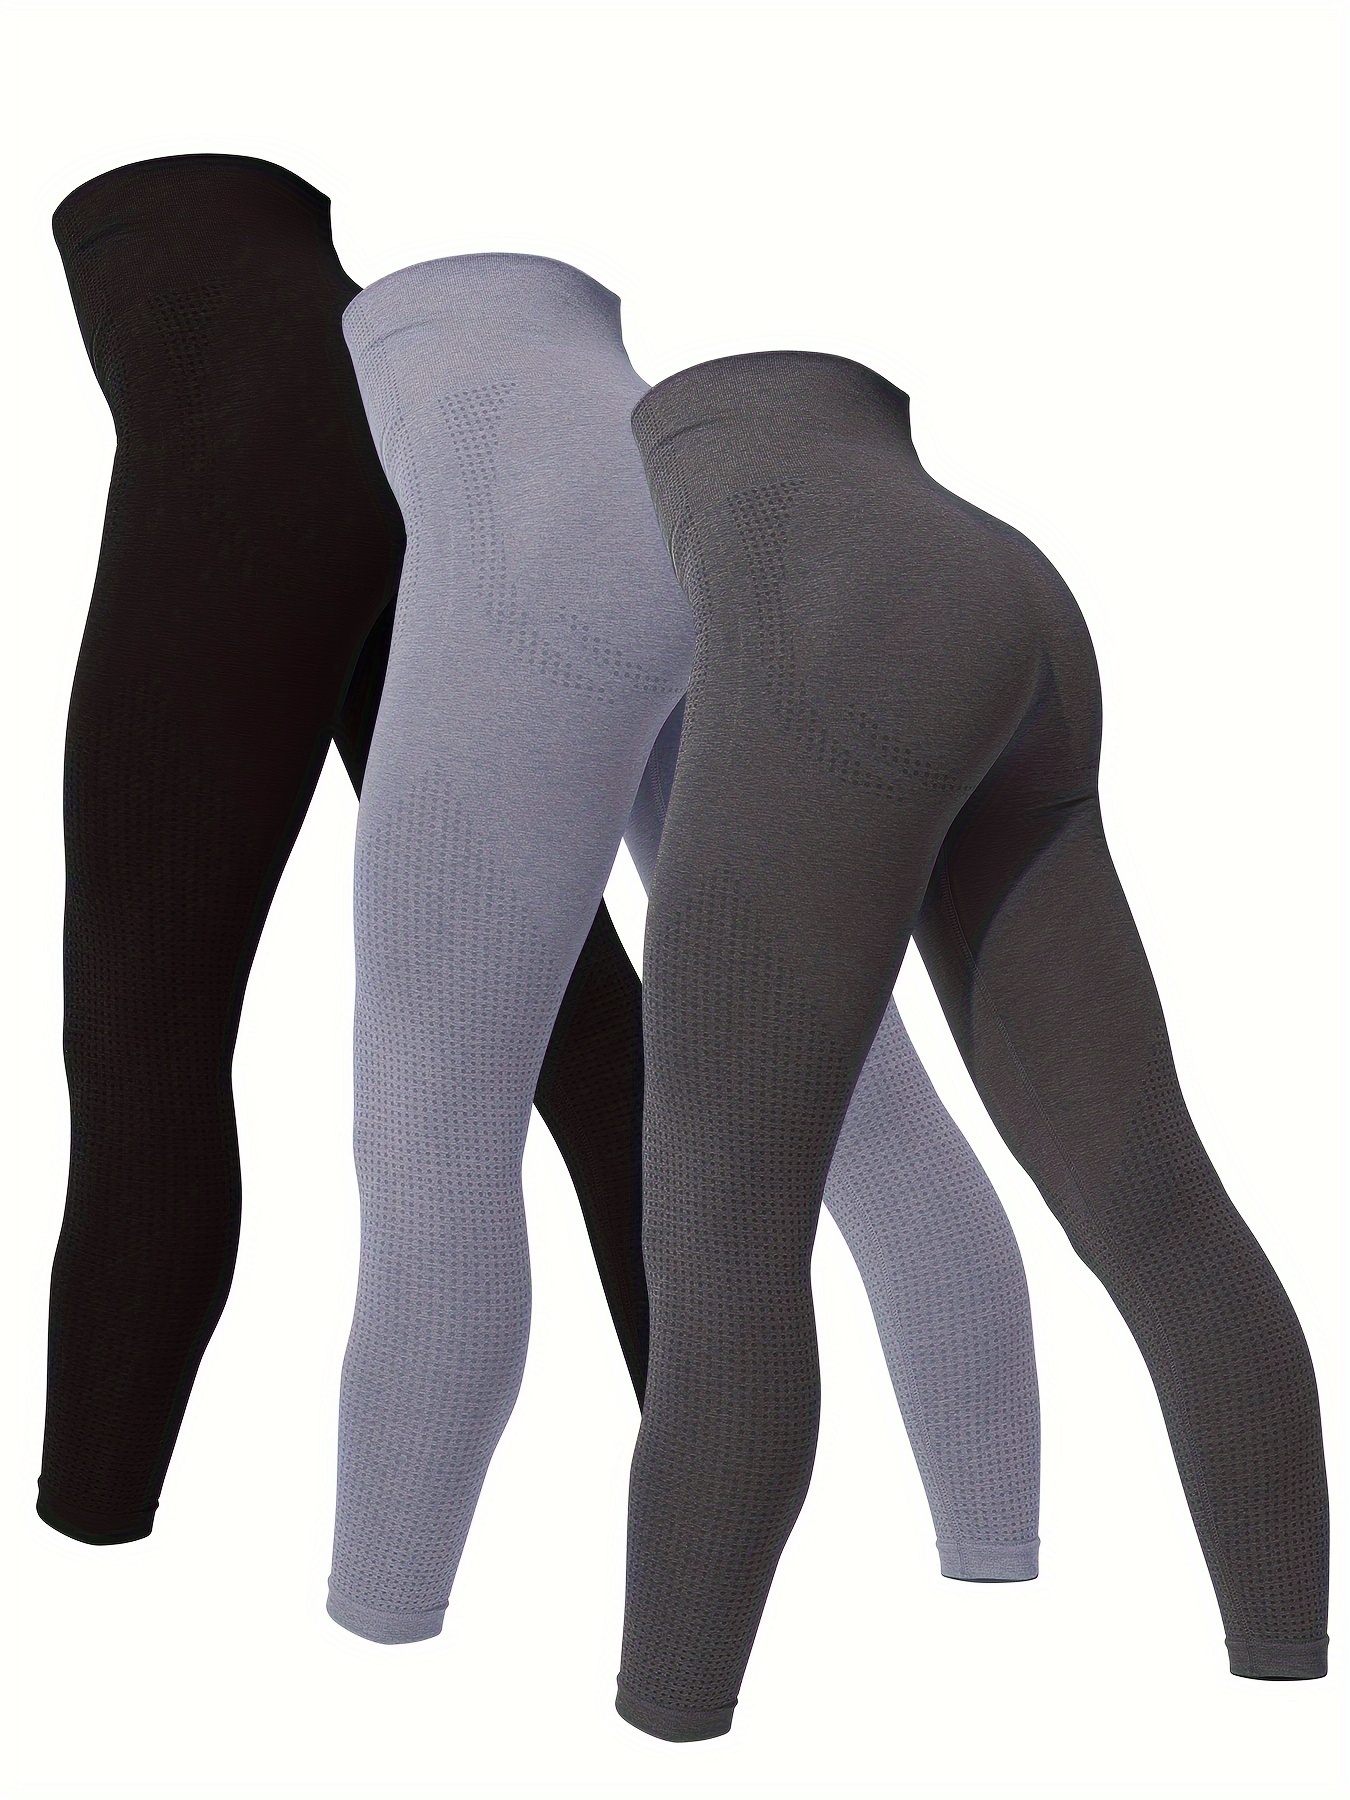 High Waist Yoga Pants Tummy Control Gym Leggings Sport Fitness Seamless  Female Legging Workout Clothes For Women Athletic Wear - Yoga Pants -  AliExpress